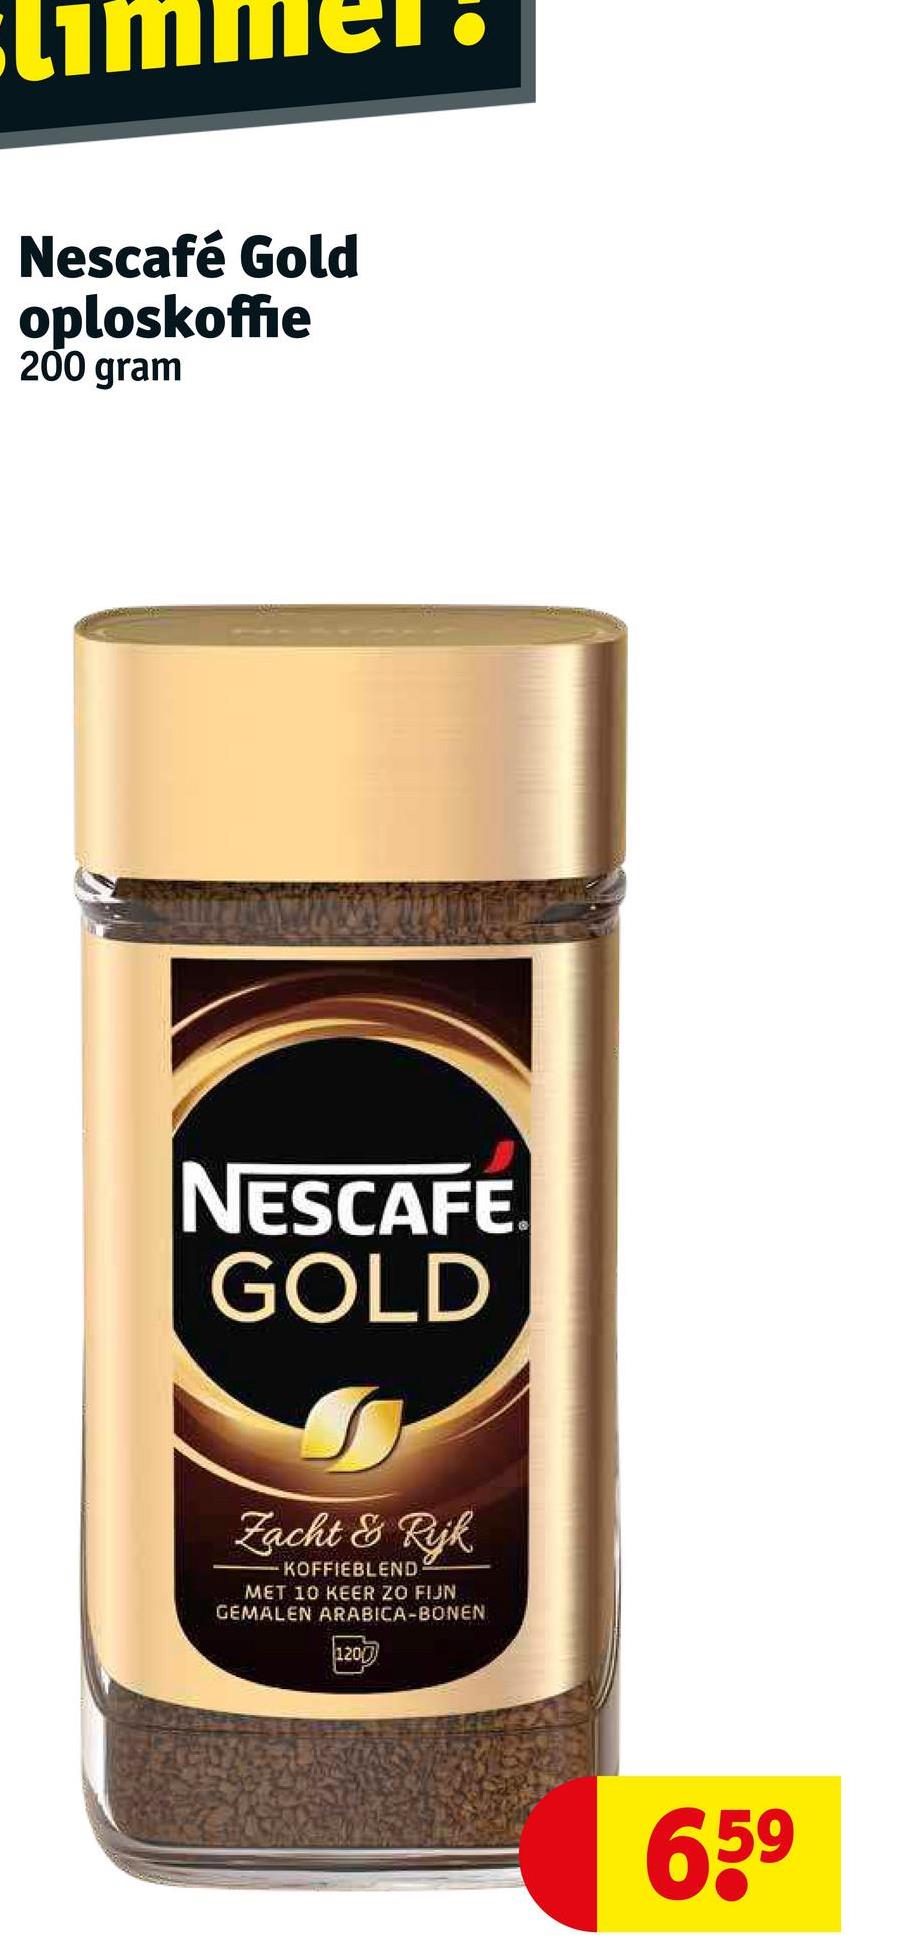 Nescafé Gold
oploskoffie
200 gram
NESCAFE.
GOLD
Zacht & Rijk
KOFFIEBLEND
MET 10 KEER ZO FIJN
GEMALEN ARABICA-BONEN
1200
65⁹